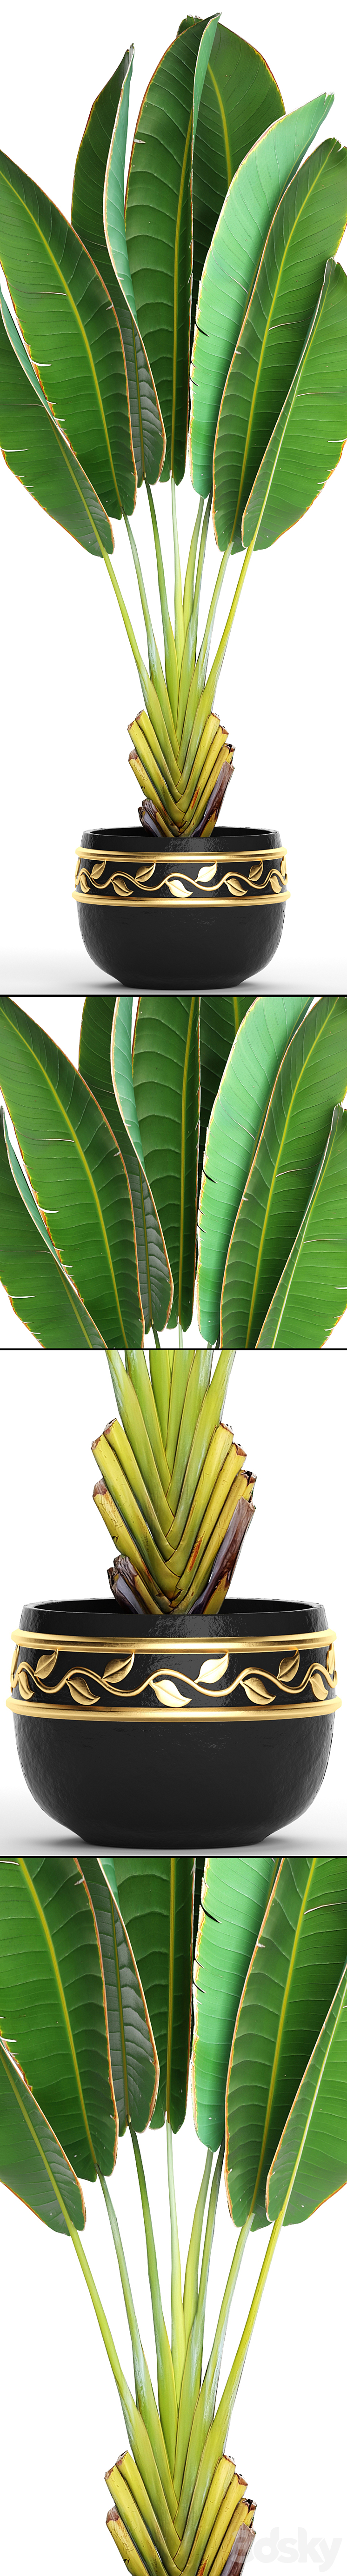 Ravenala 2. Strelitzia ravenala banana bush palm tree black pot flower flowerpot luxury decor 3DS Max - thumbnail 2